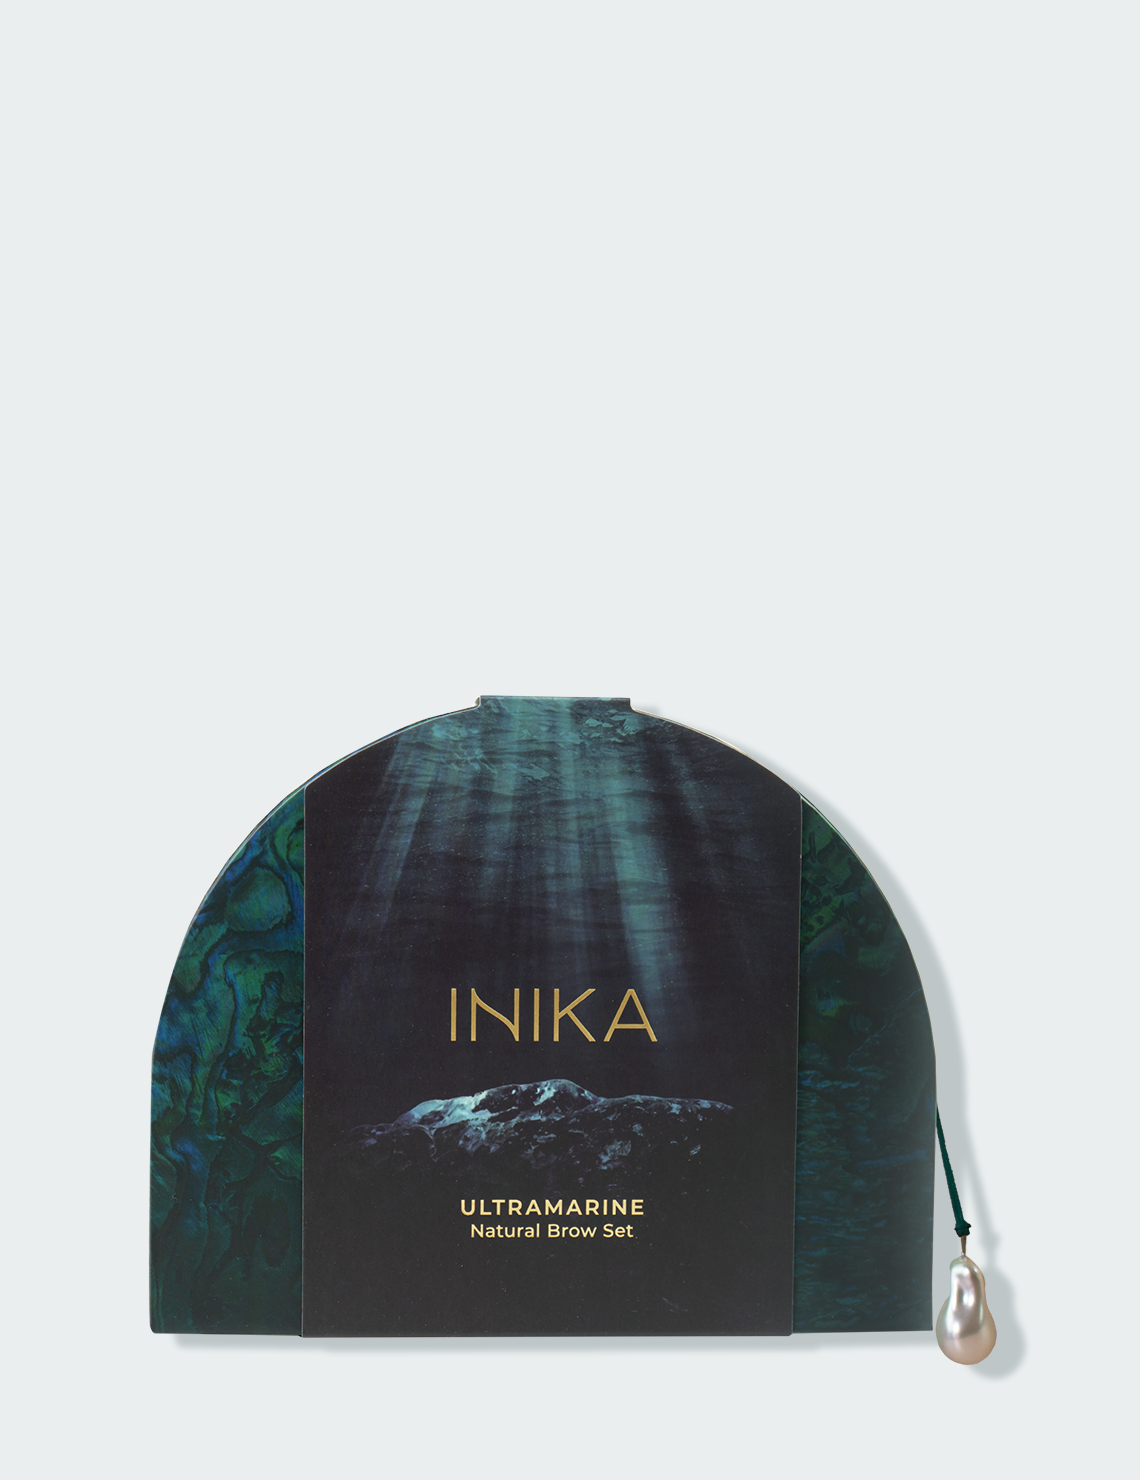 INIKA Organic Ultramarine Natural Brow Set | INIKA Organic | 02